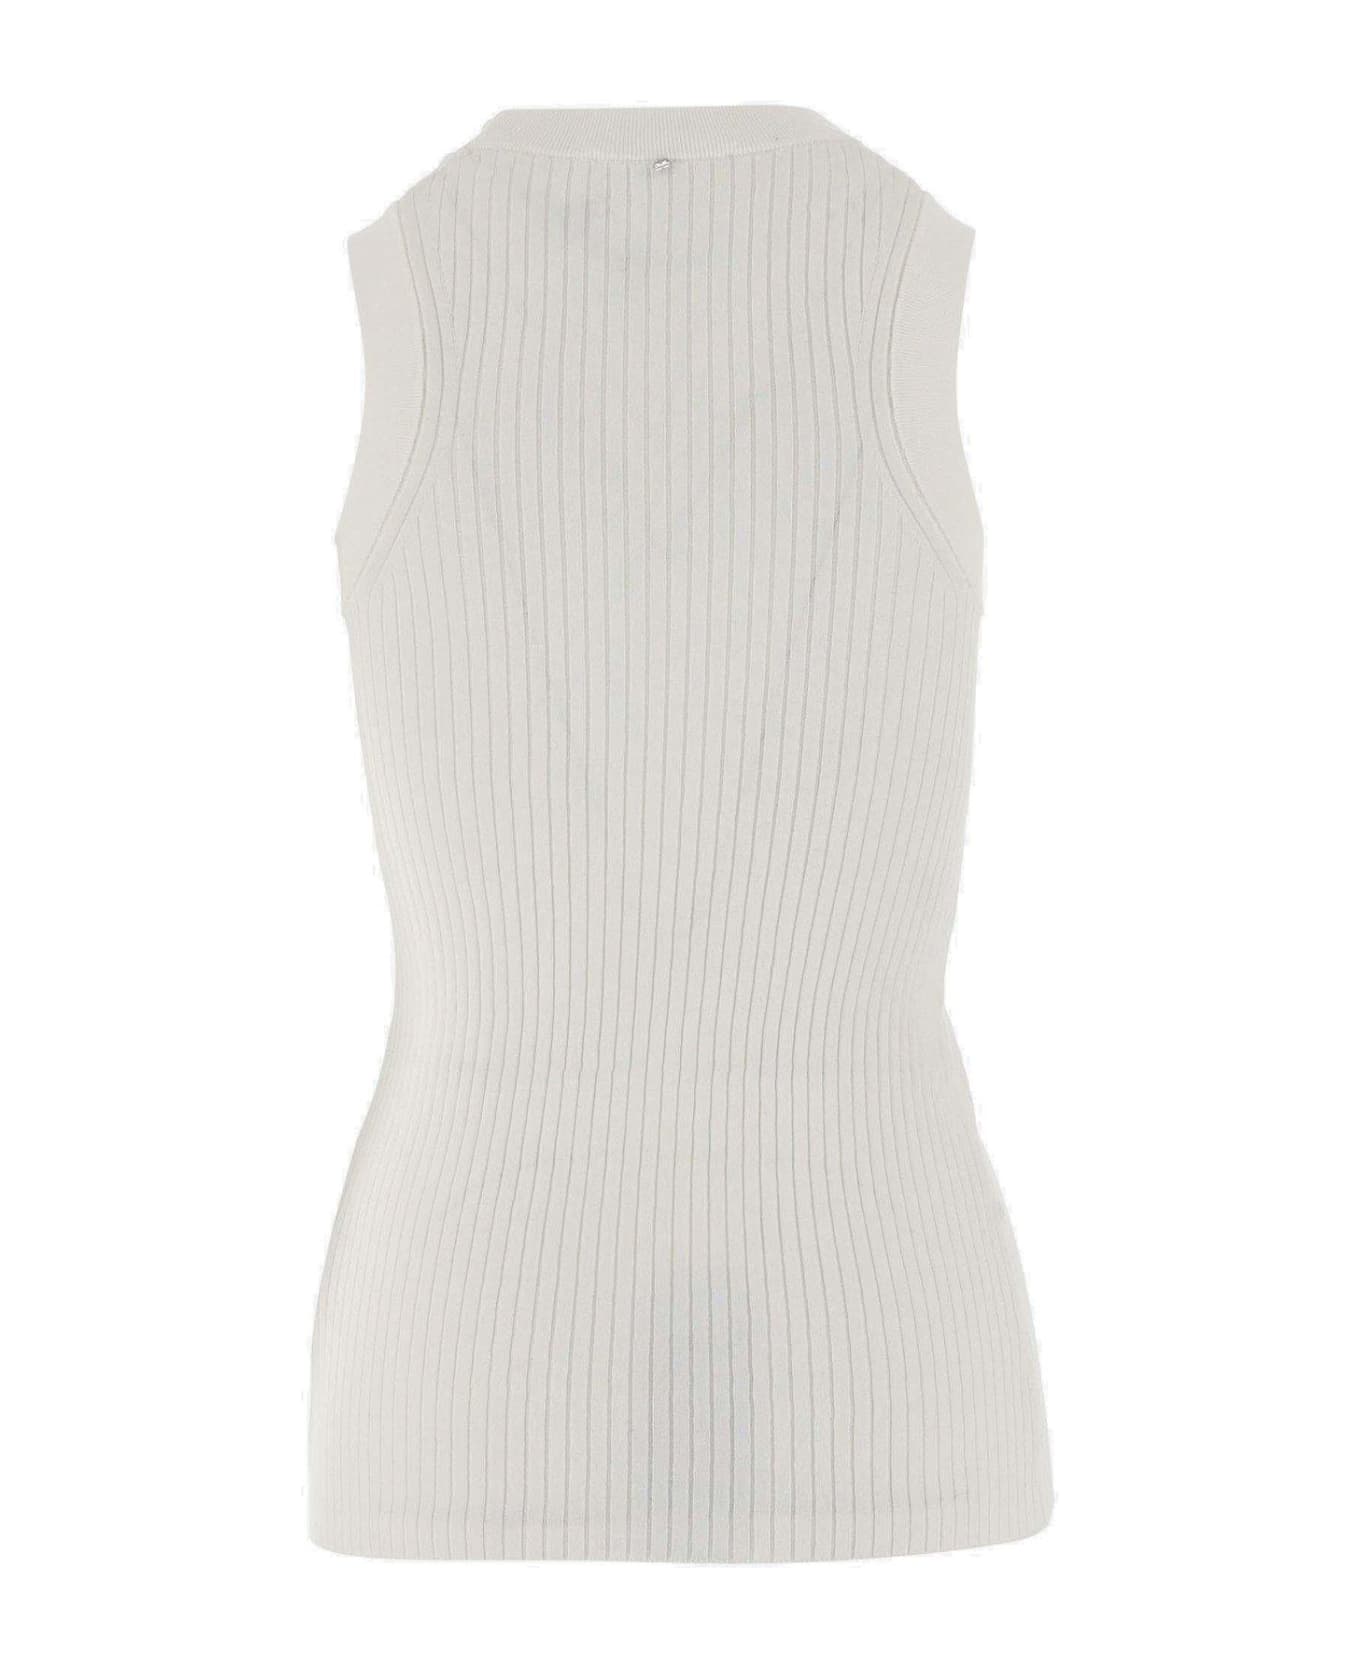 SportMax Crewneck Sleeveless Knitted Top - WHITE